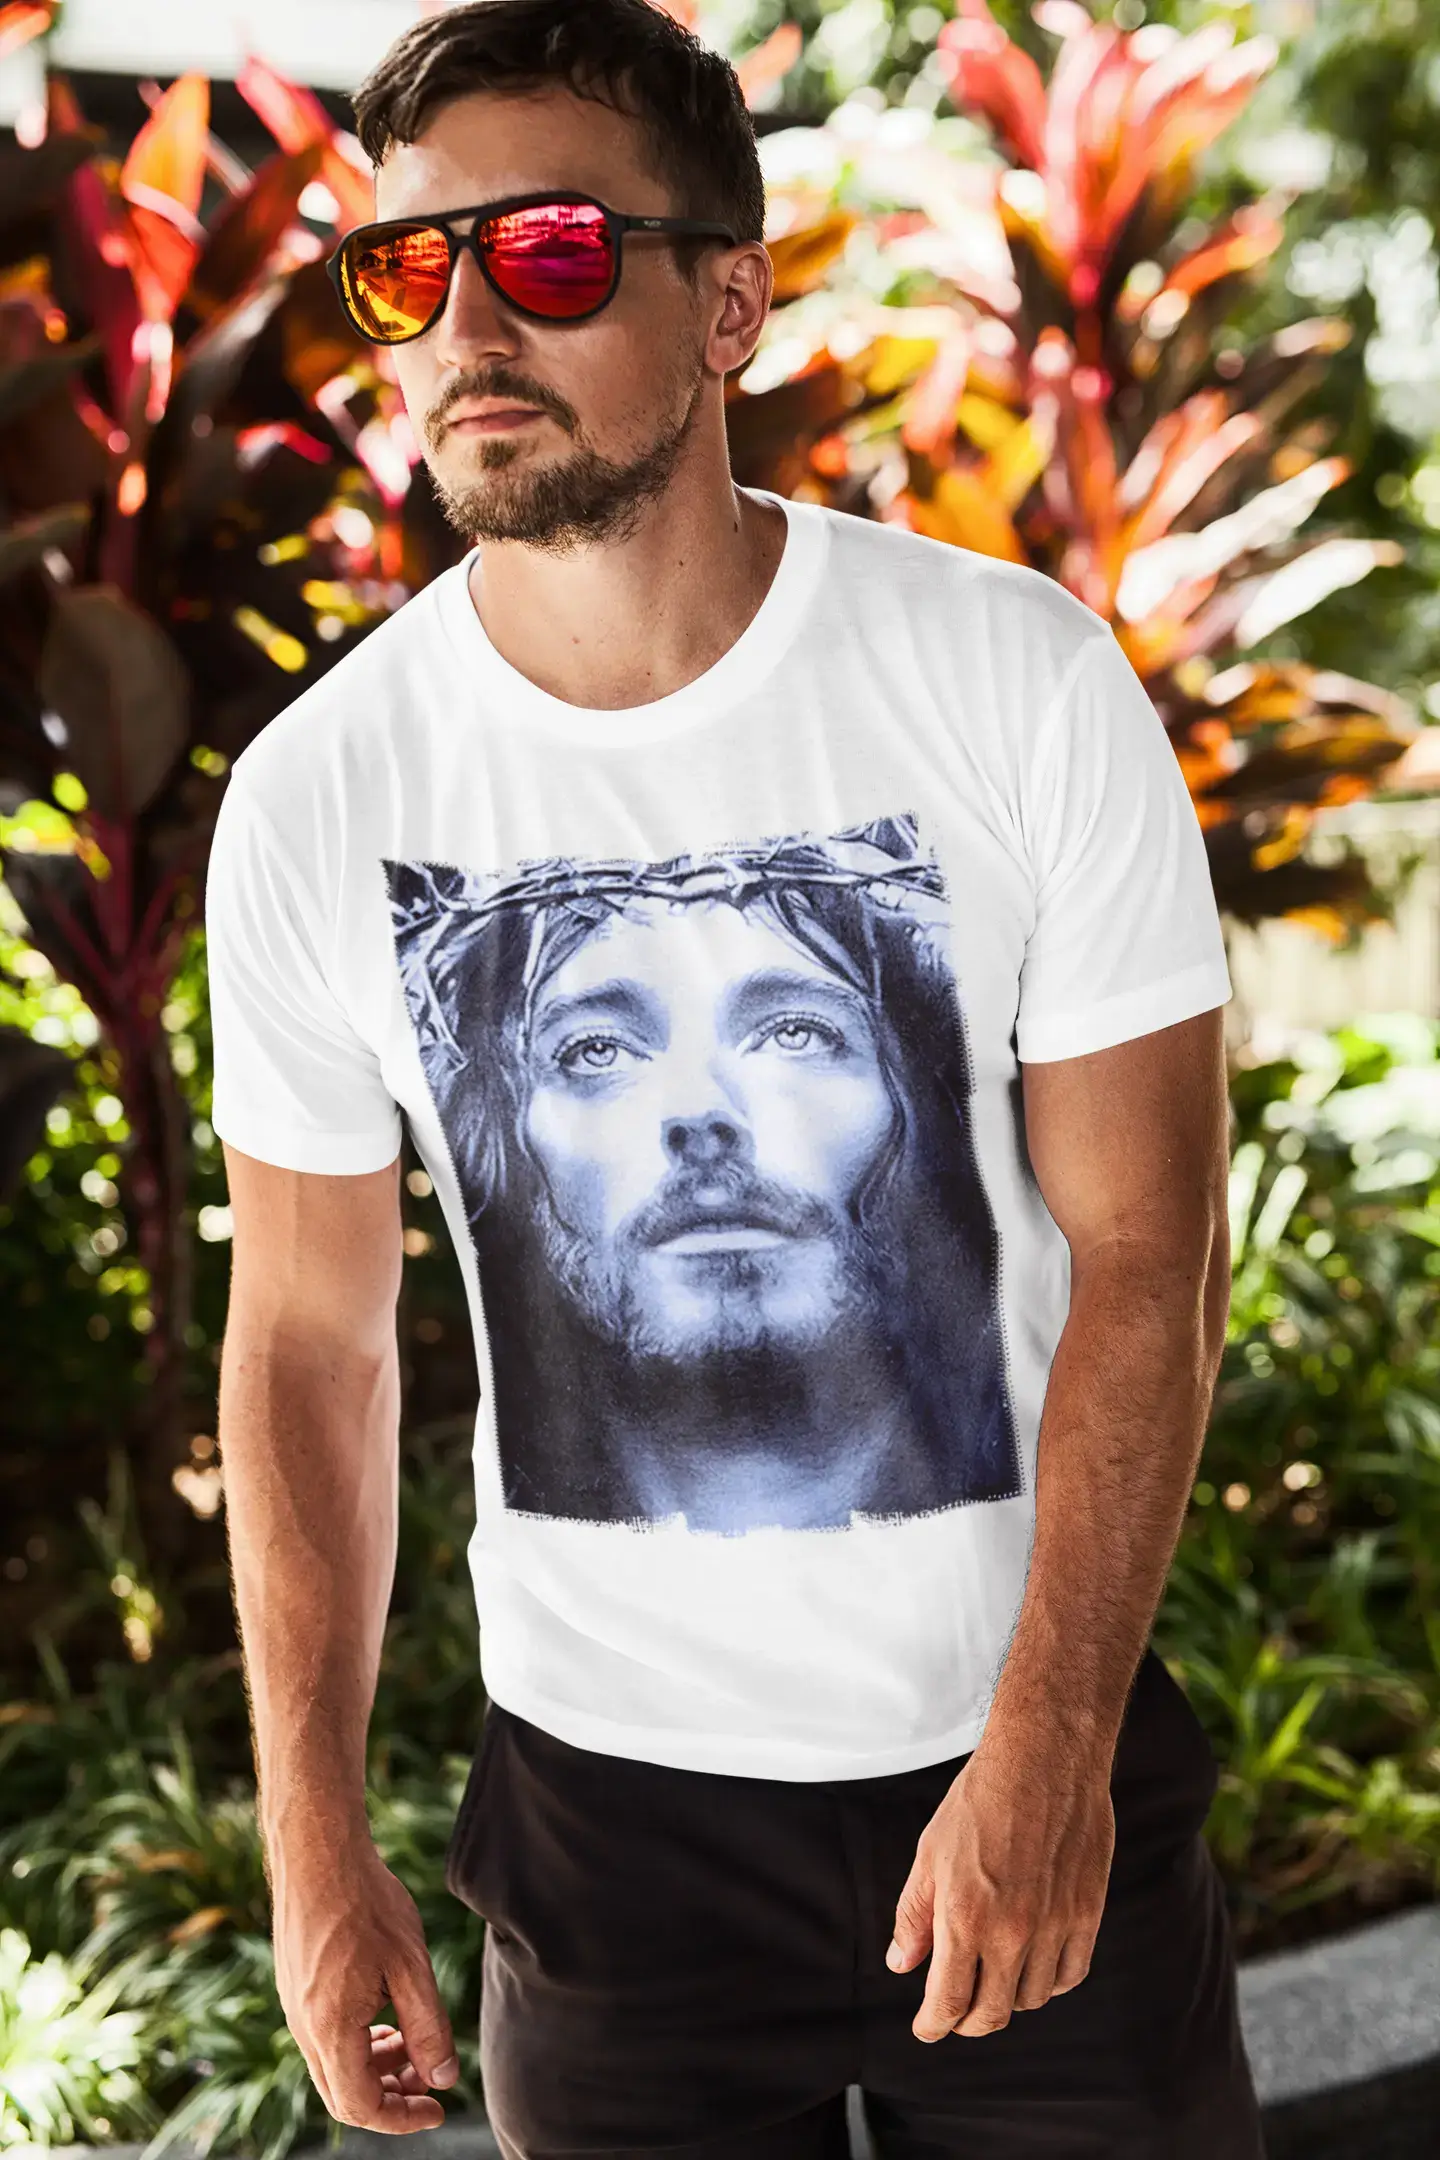 Jesus Christ Blue t-shirt celebrity Picture 7015060